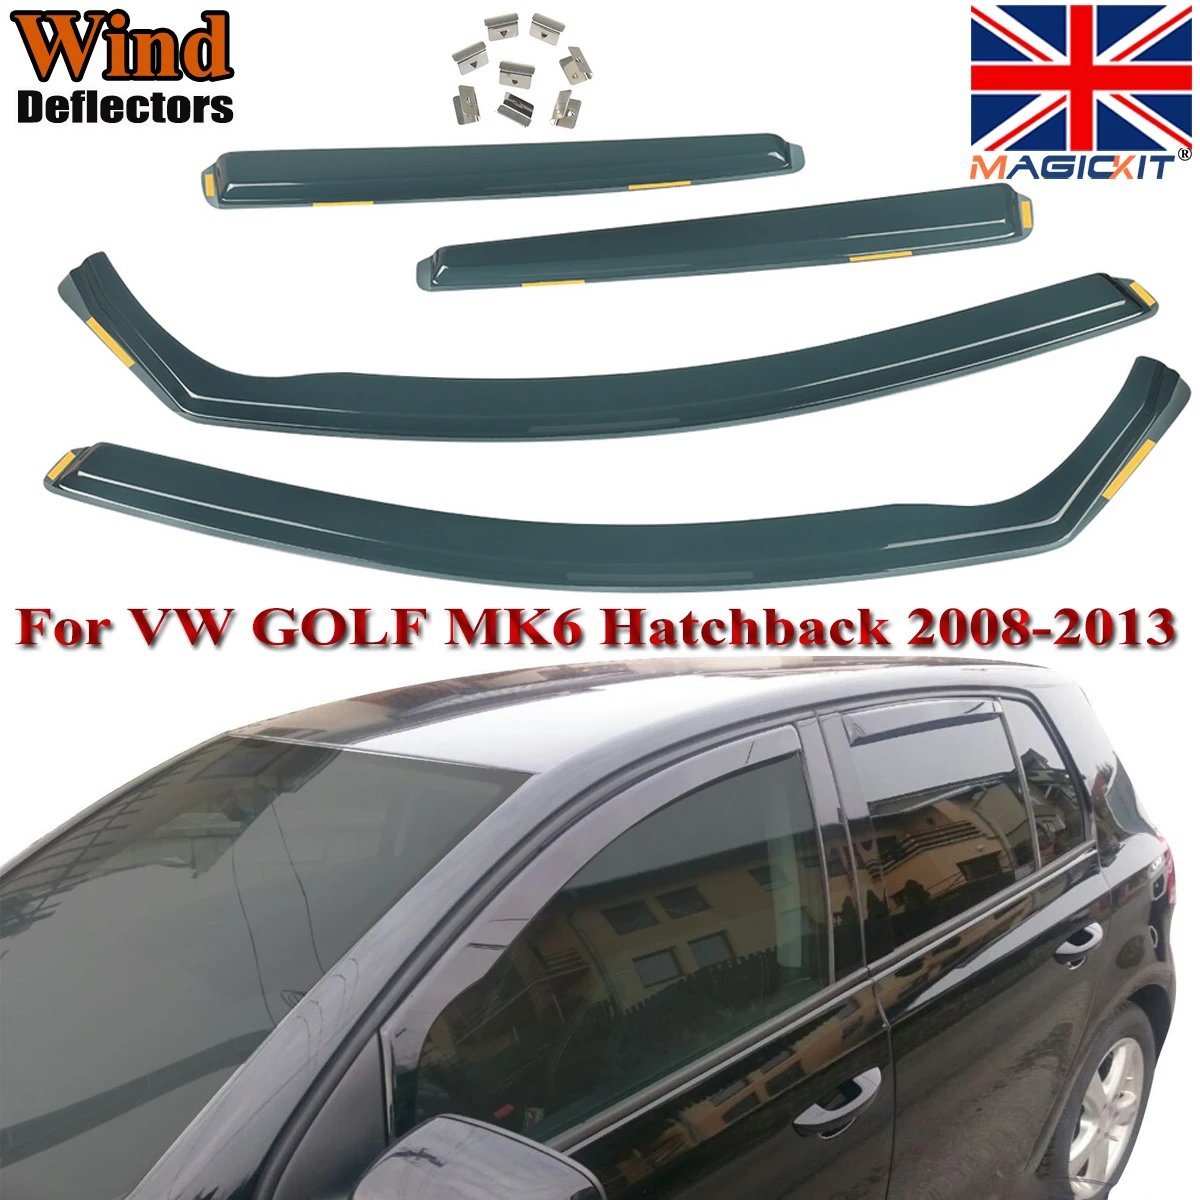 

Magickit For VW GOLF MK6 5-doors 2008-2012 Hatchback 4-pc Wind Deflectors Tinted